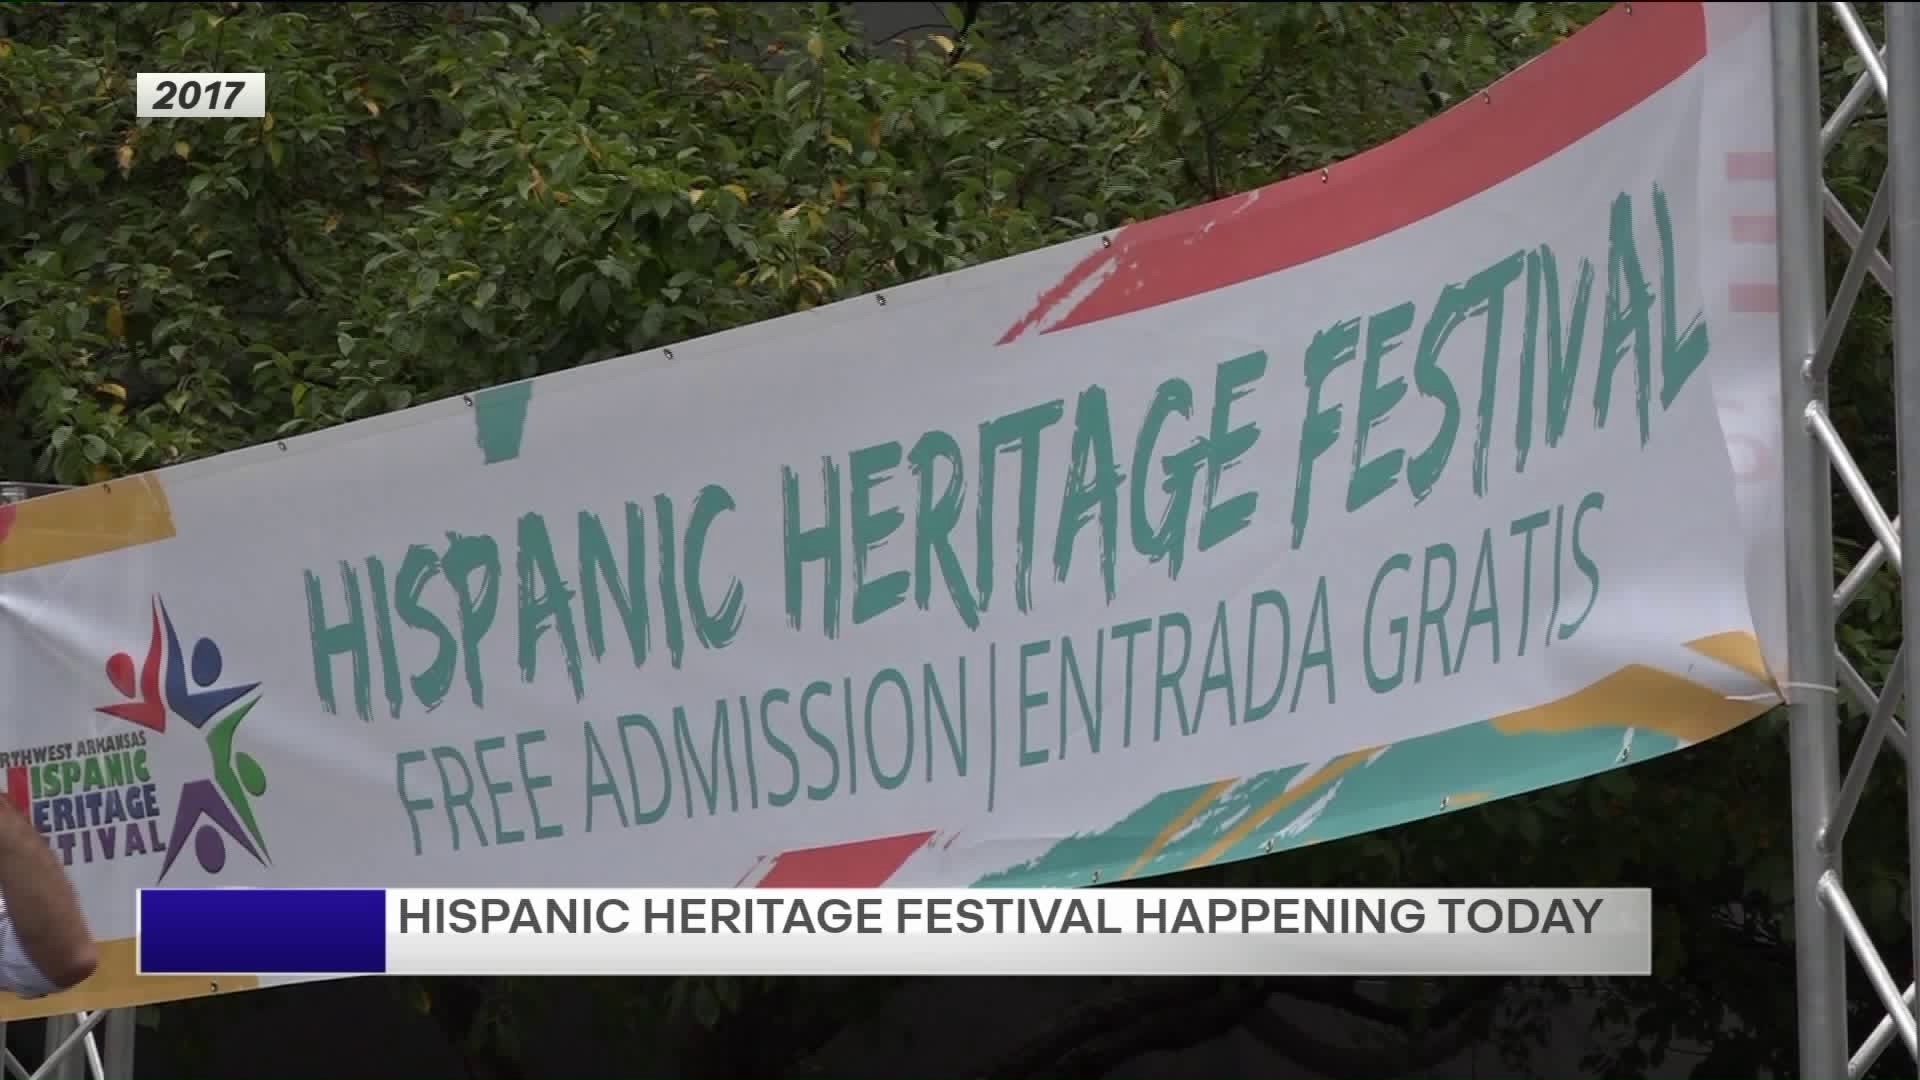 NWA Hispanic Heritage Festival Taking Place On Fayetteville Square Today